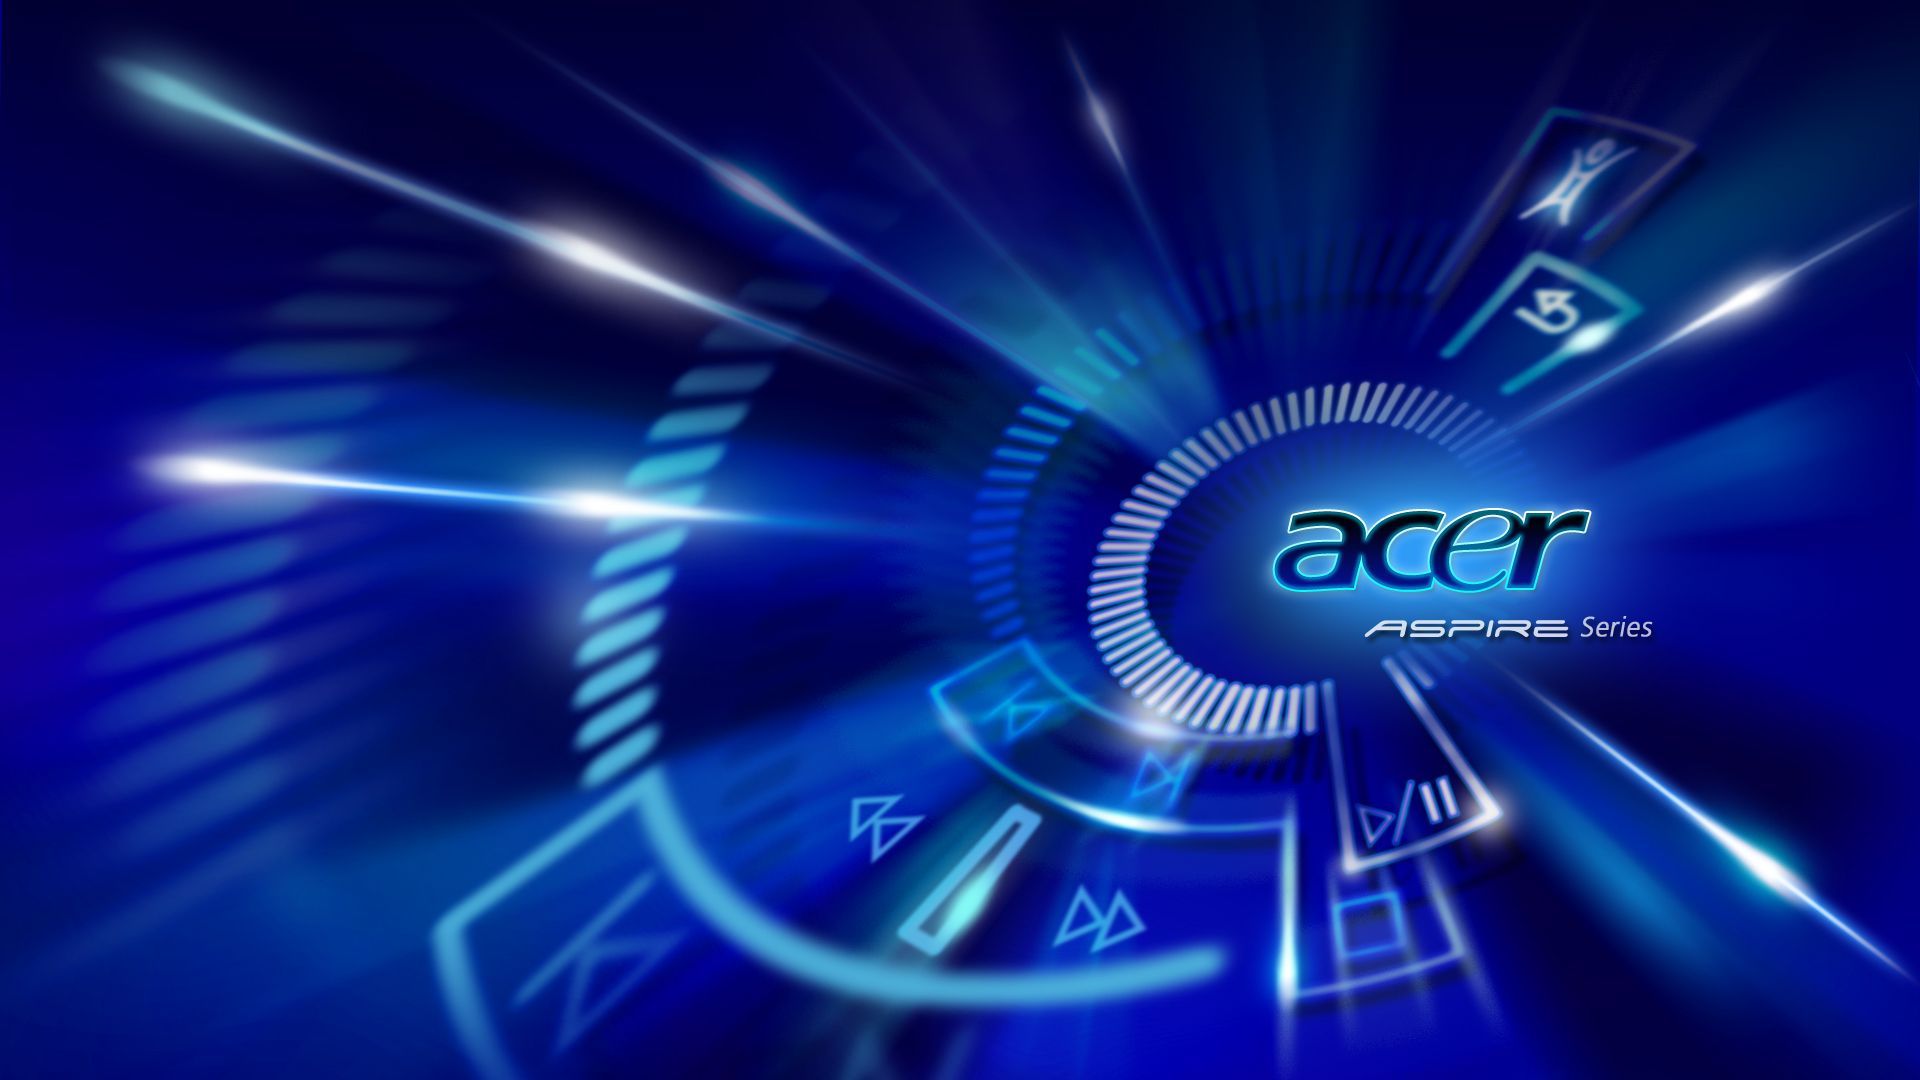 Acer aspire series wallpaper | Wallpaper Wide HD